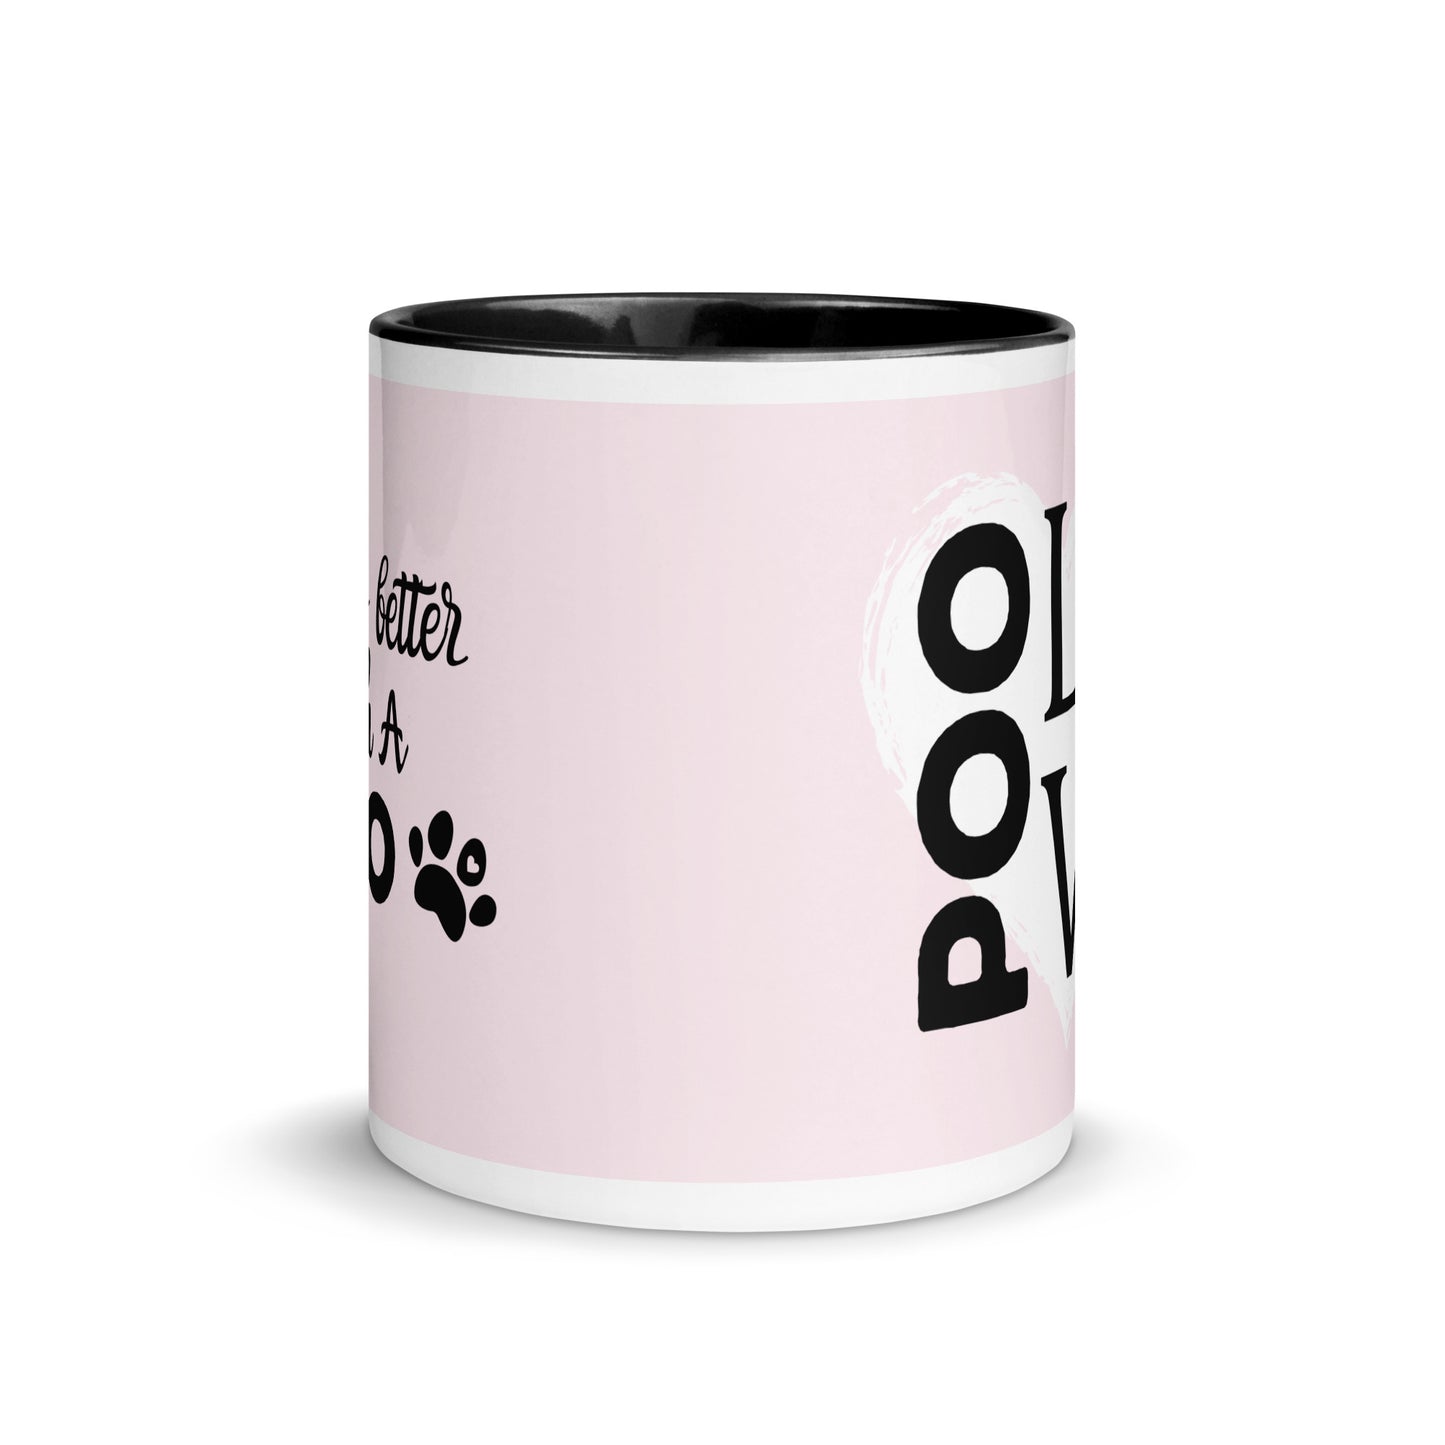 "Poo Love 2" - light pink